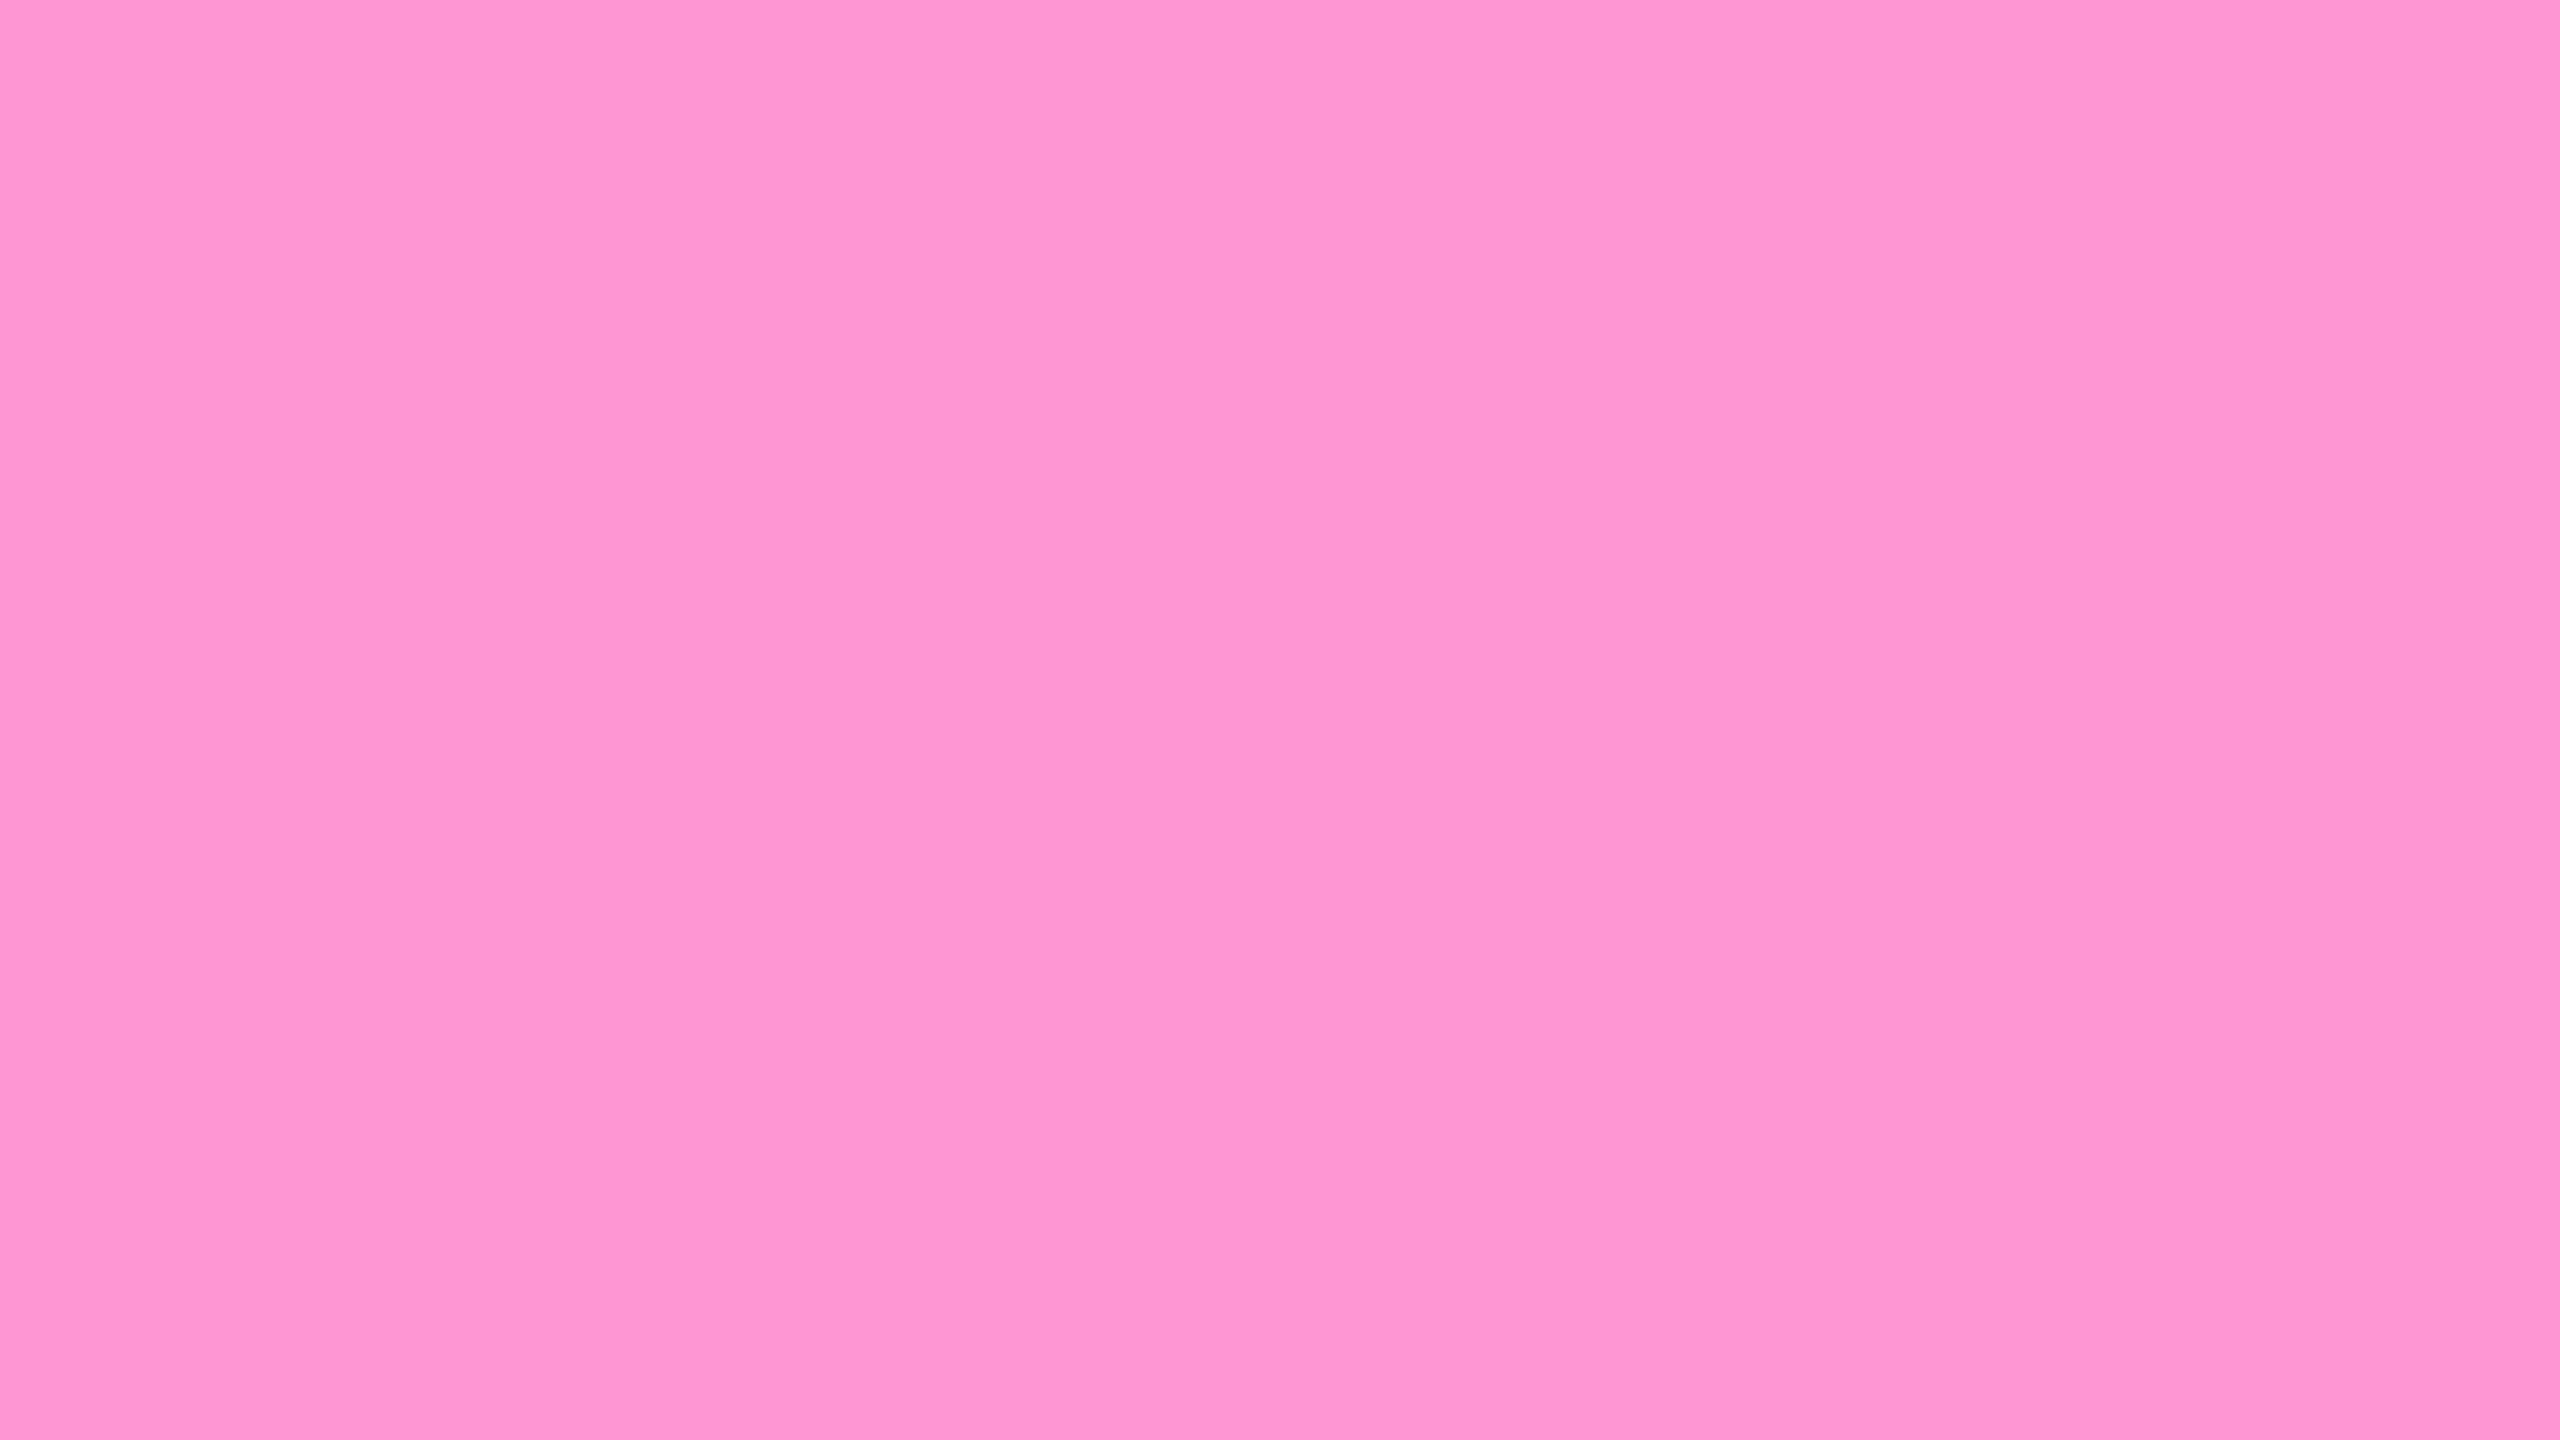 2560x1440 Light pink at backgoround girly wallpaper